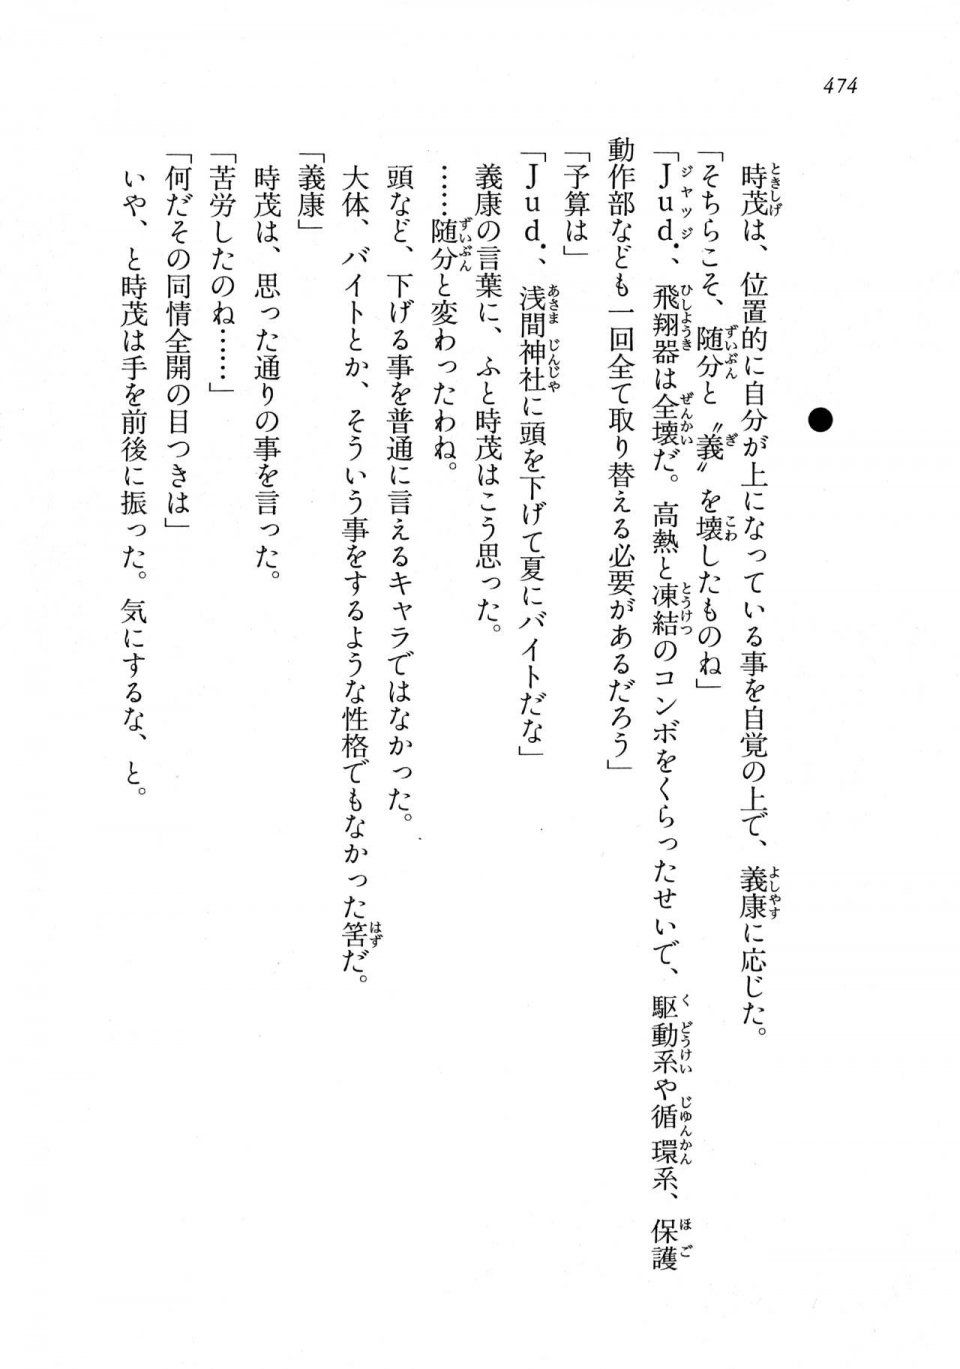 Kyoukai Senjou no Horizon LN Vol 18(7C) Part 1 - Photo #474